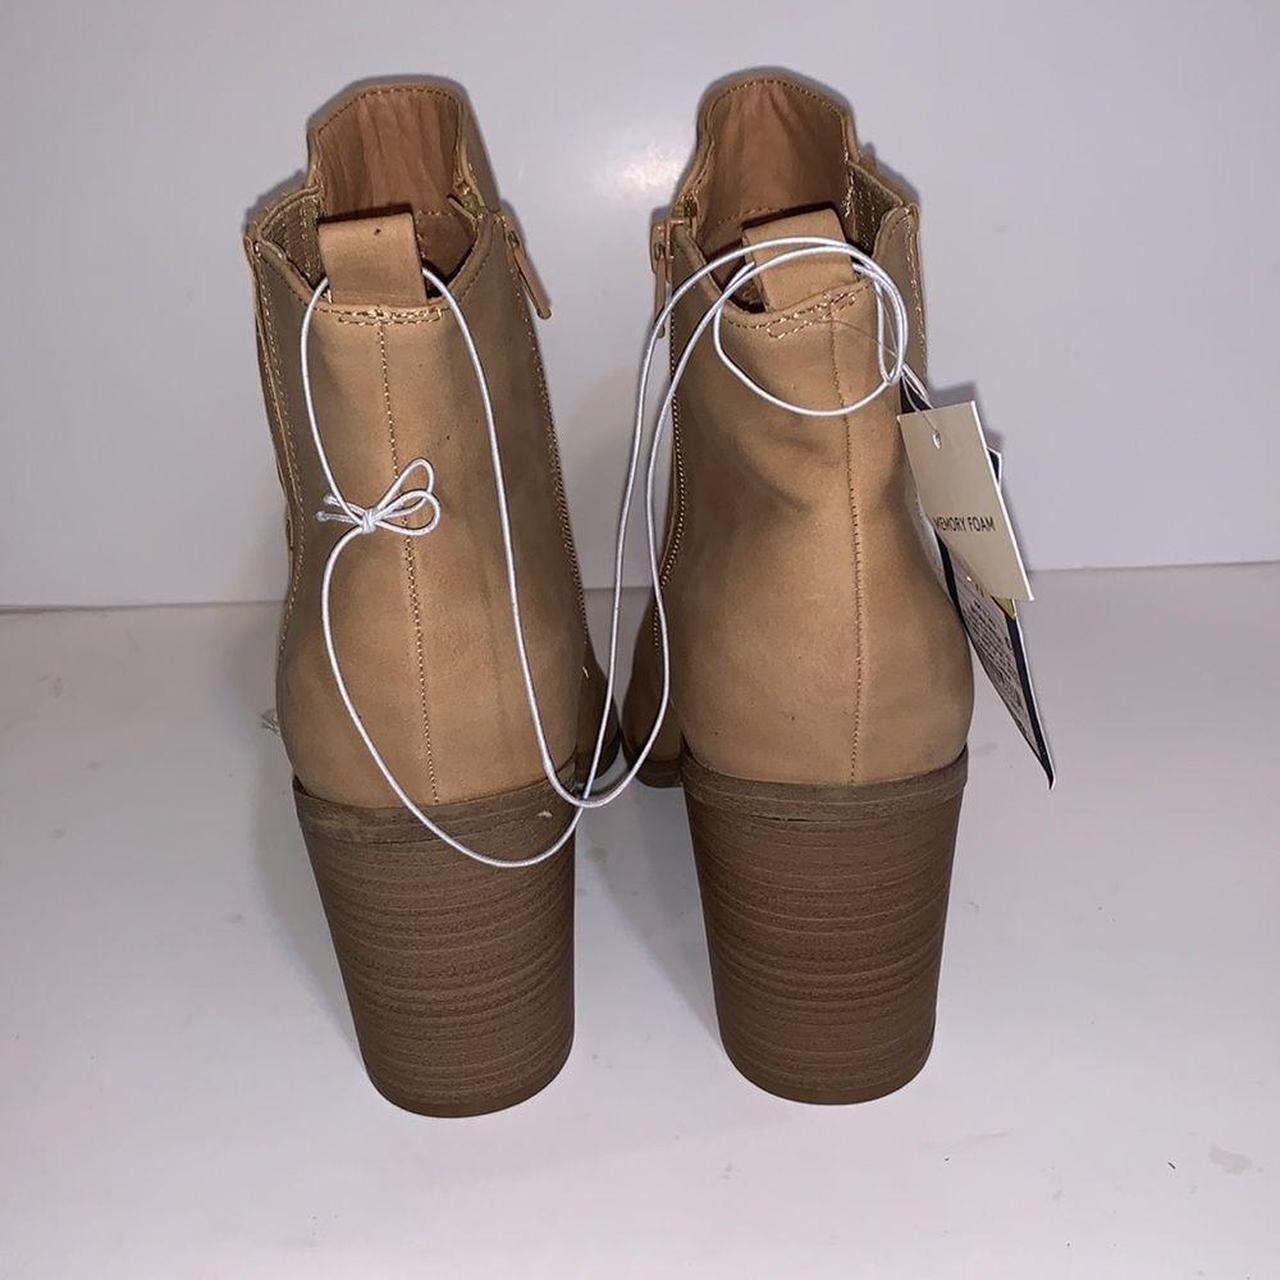 Universal Thread Women's Tan Boots (4)